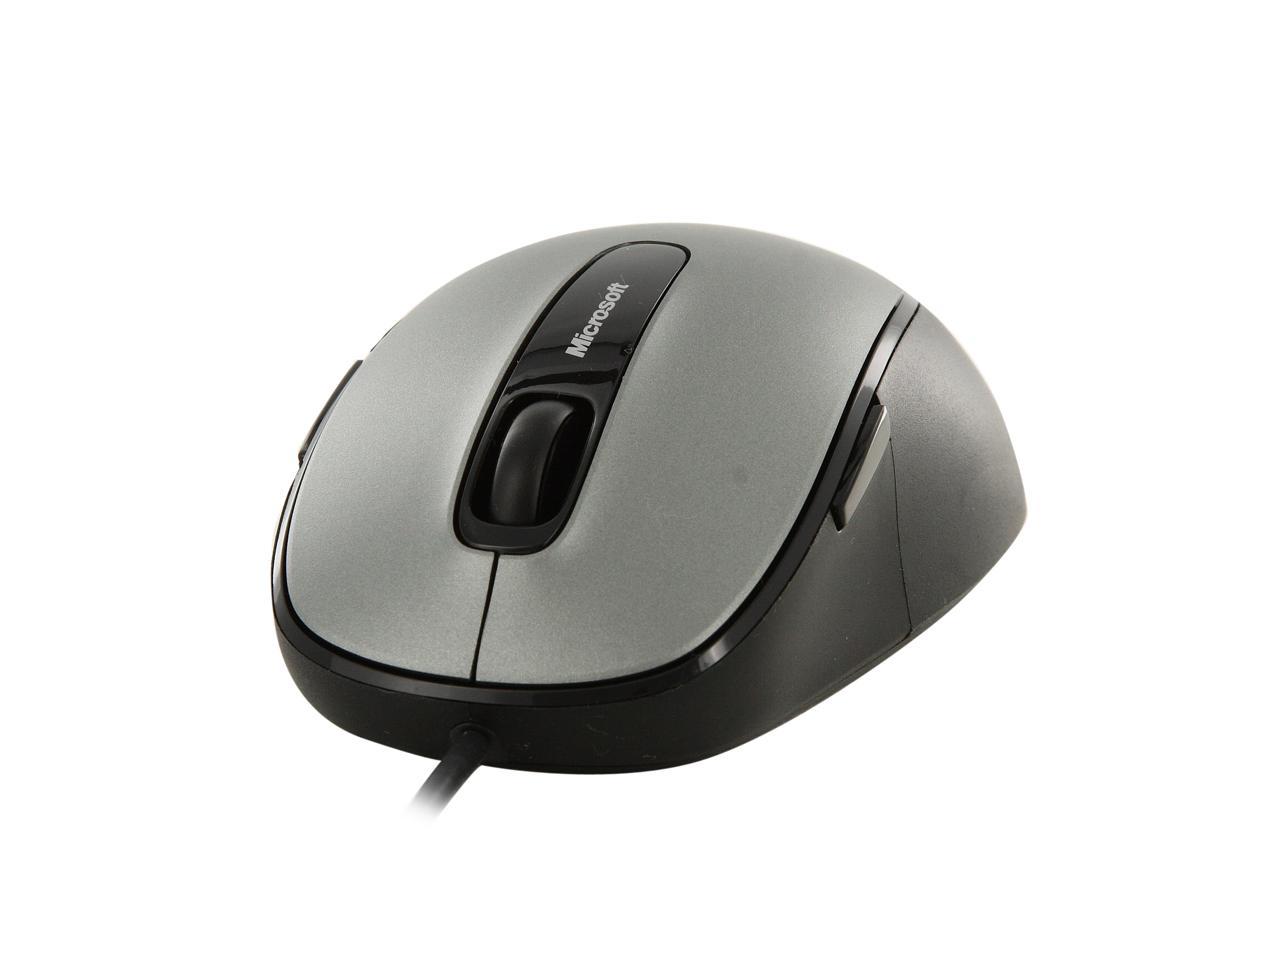 Microsoft Comfort Mouse 4500 - Lochness Gray - Newegg.com